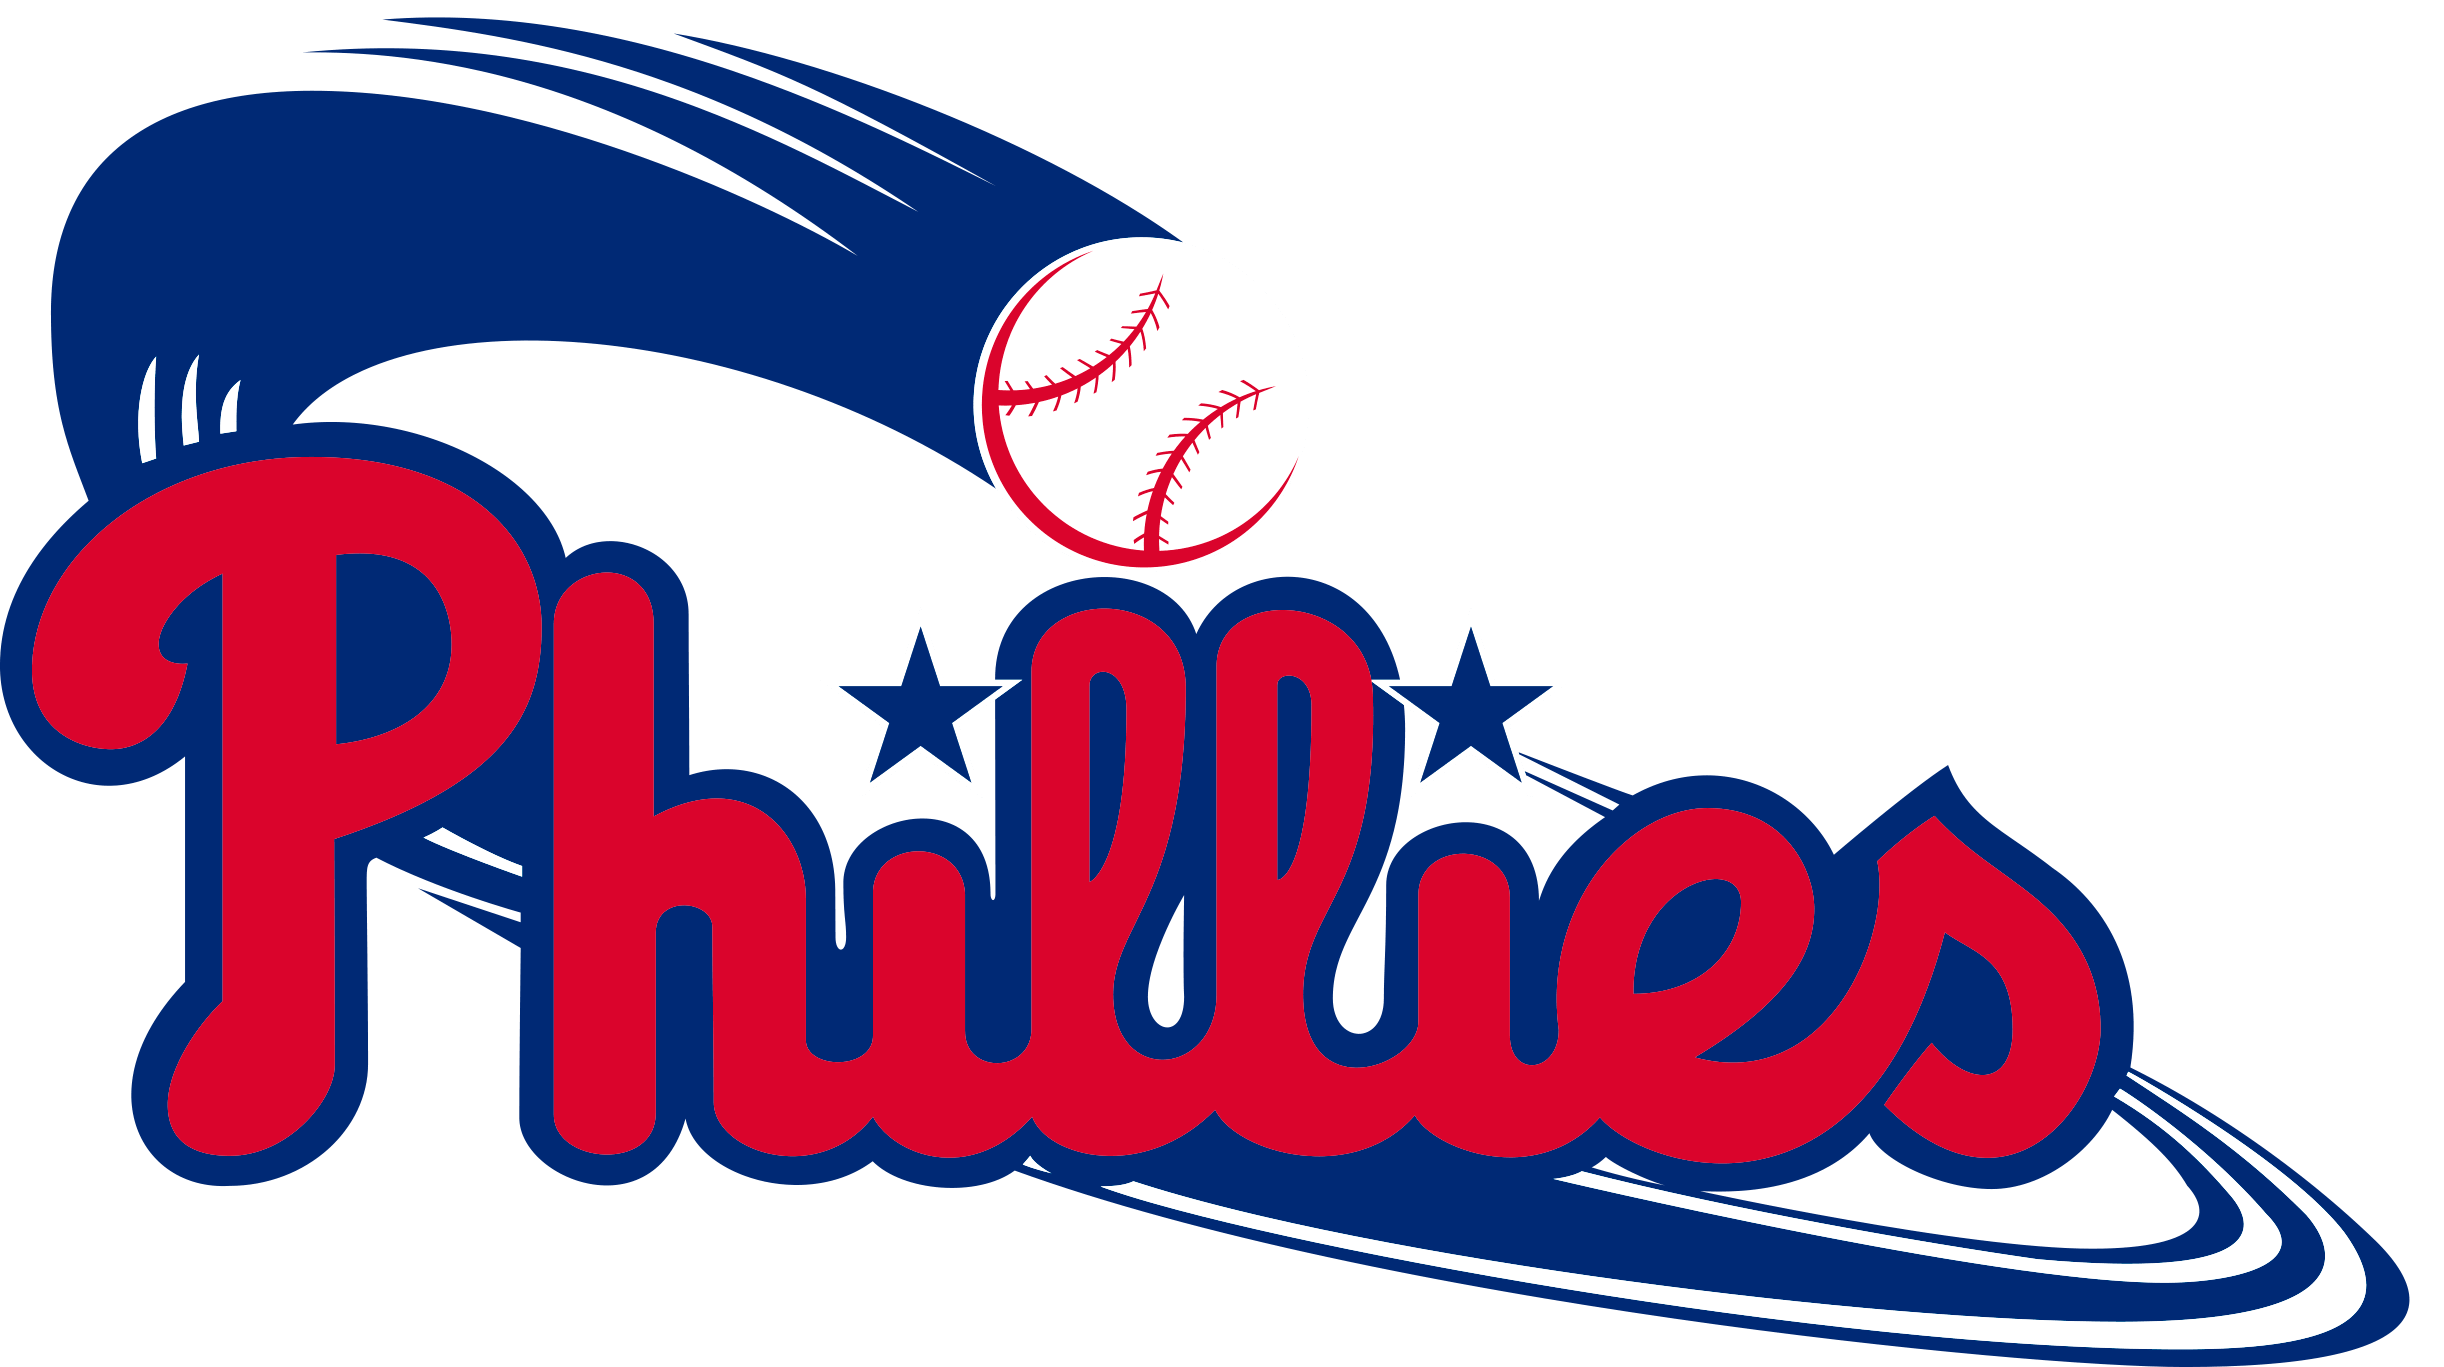 450+ file Philadelphia-Phillies svg dxf eps png, bundle MLB svg, for  Cricut, Silhouette, digital, file cut